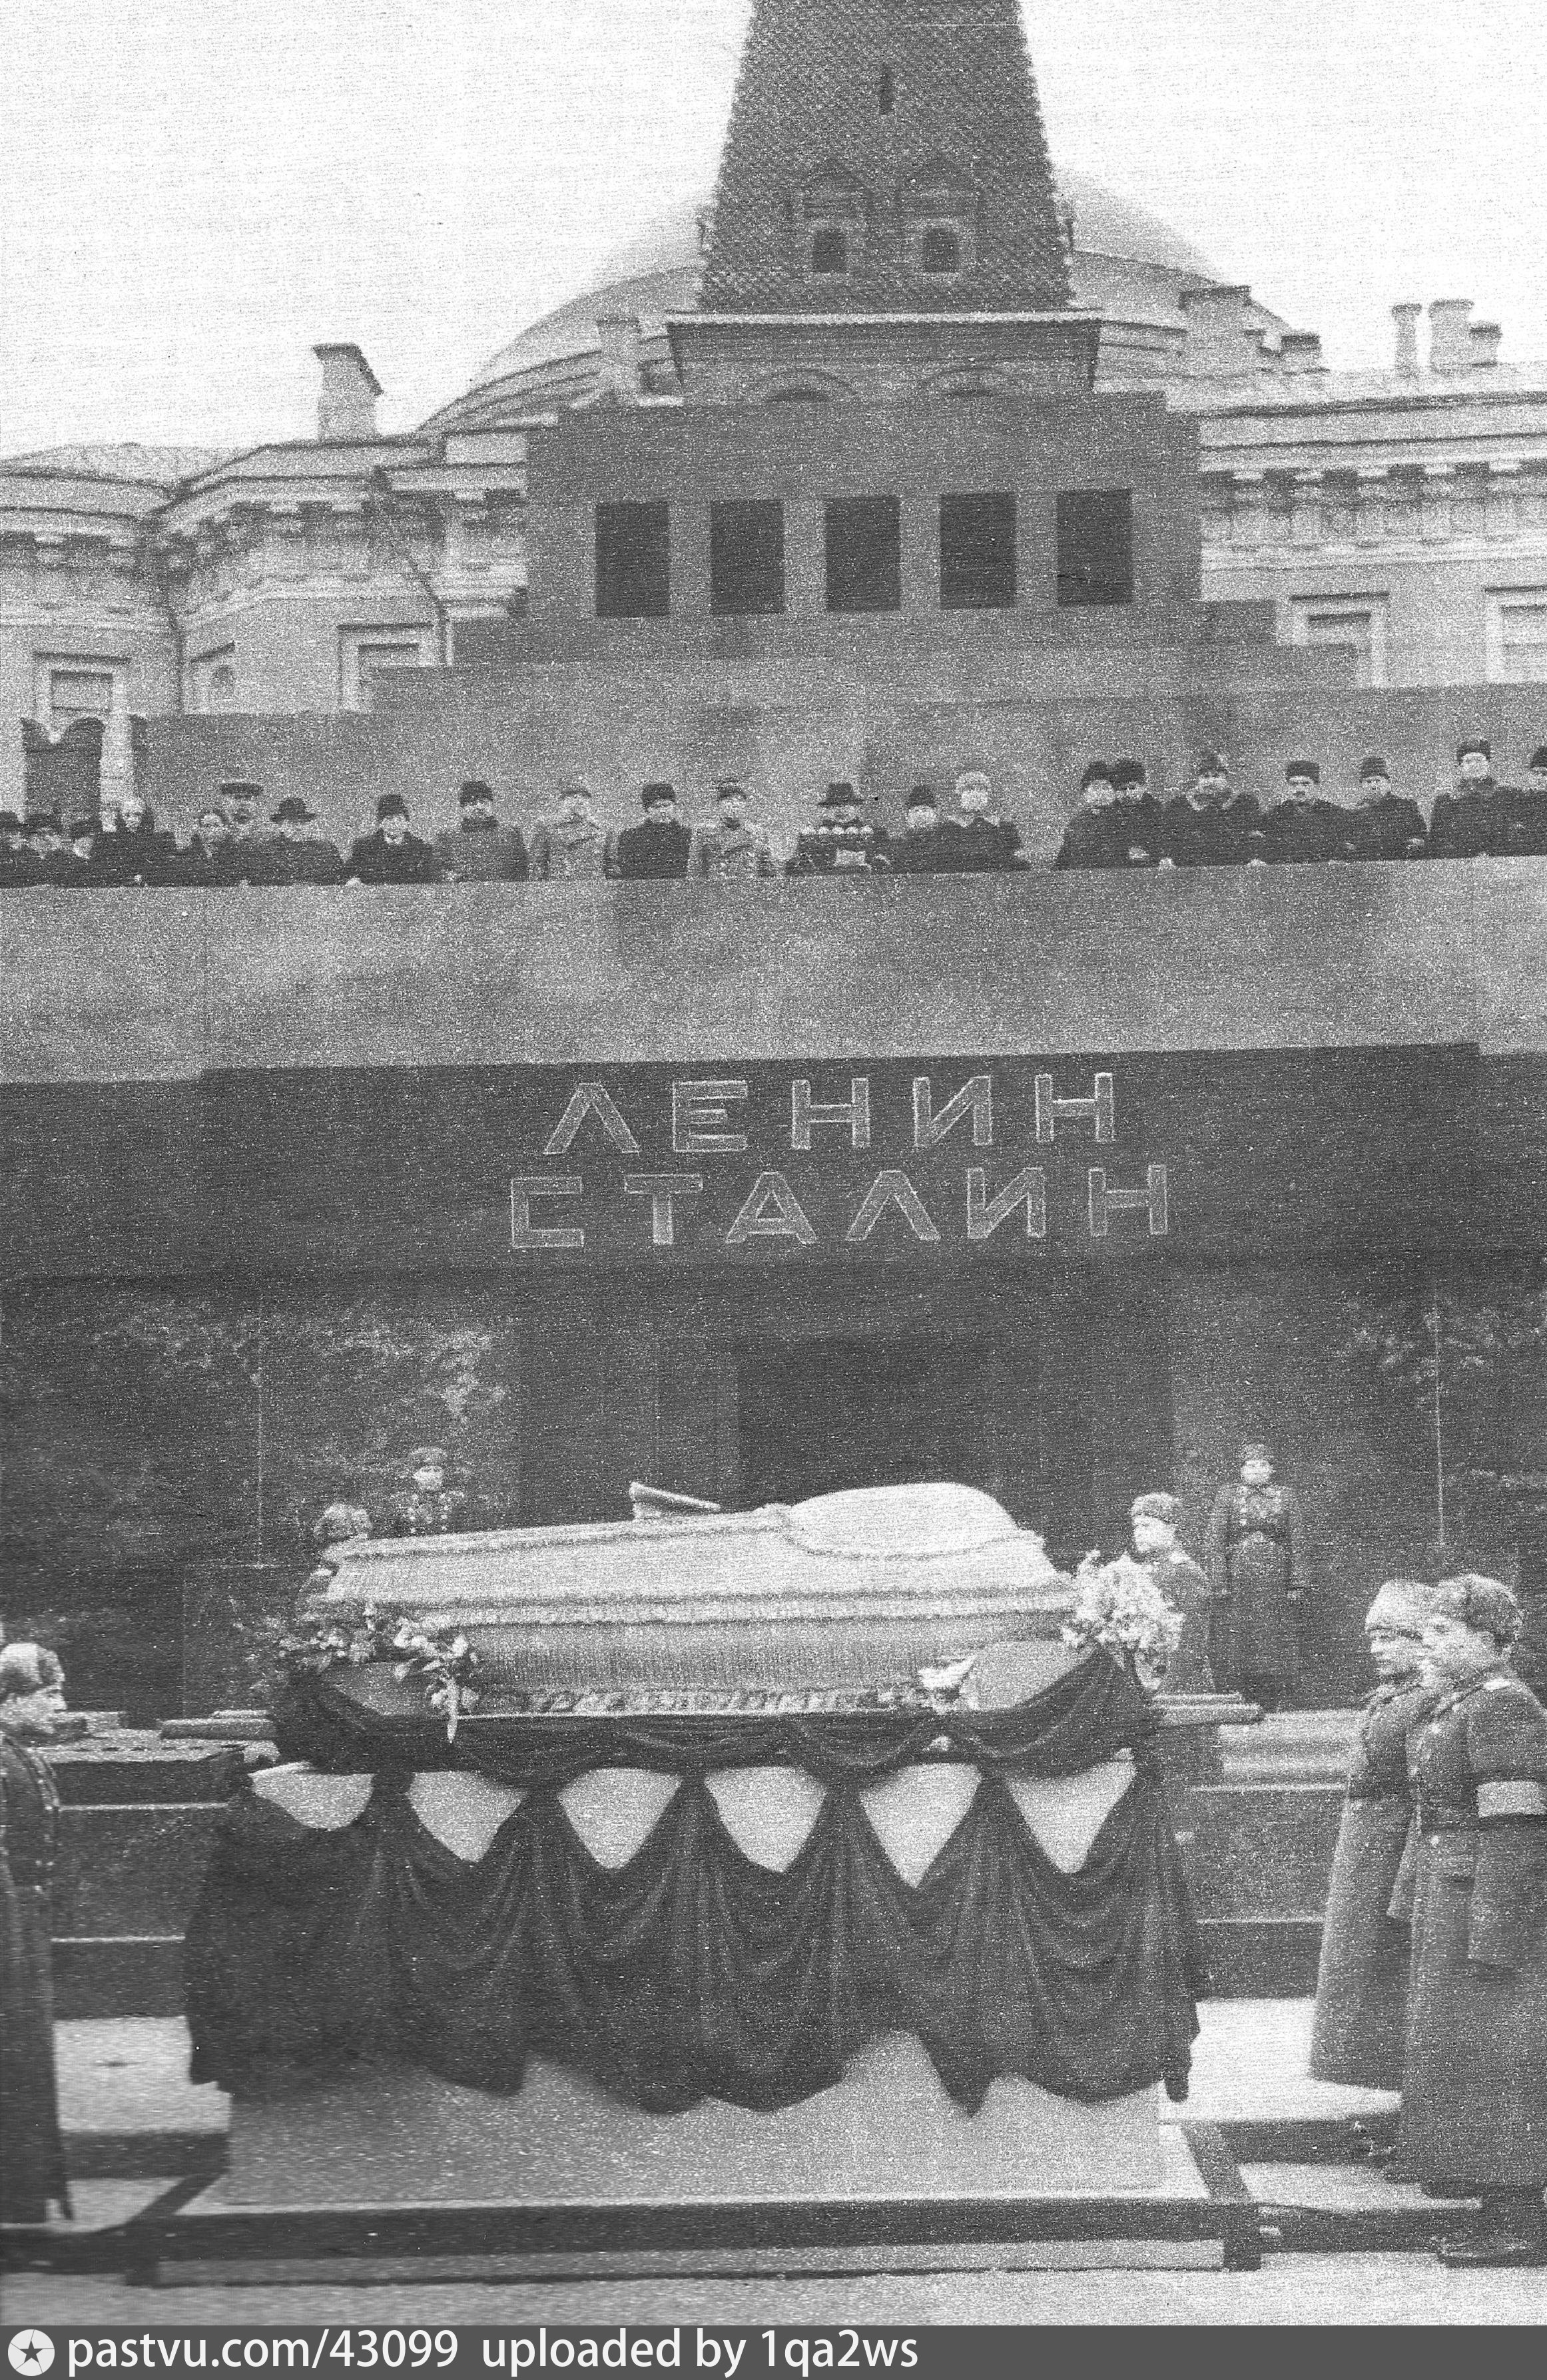 Автор мавзолея ленина. Мавзолей Ленина и Сталина. Ленин на красной площади в мавзолее.